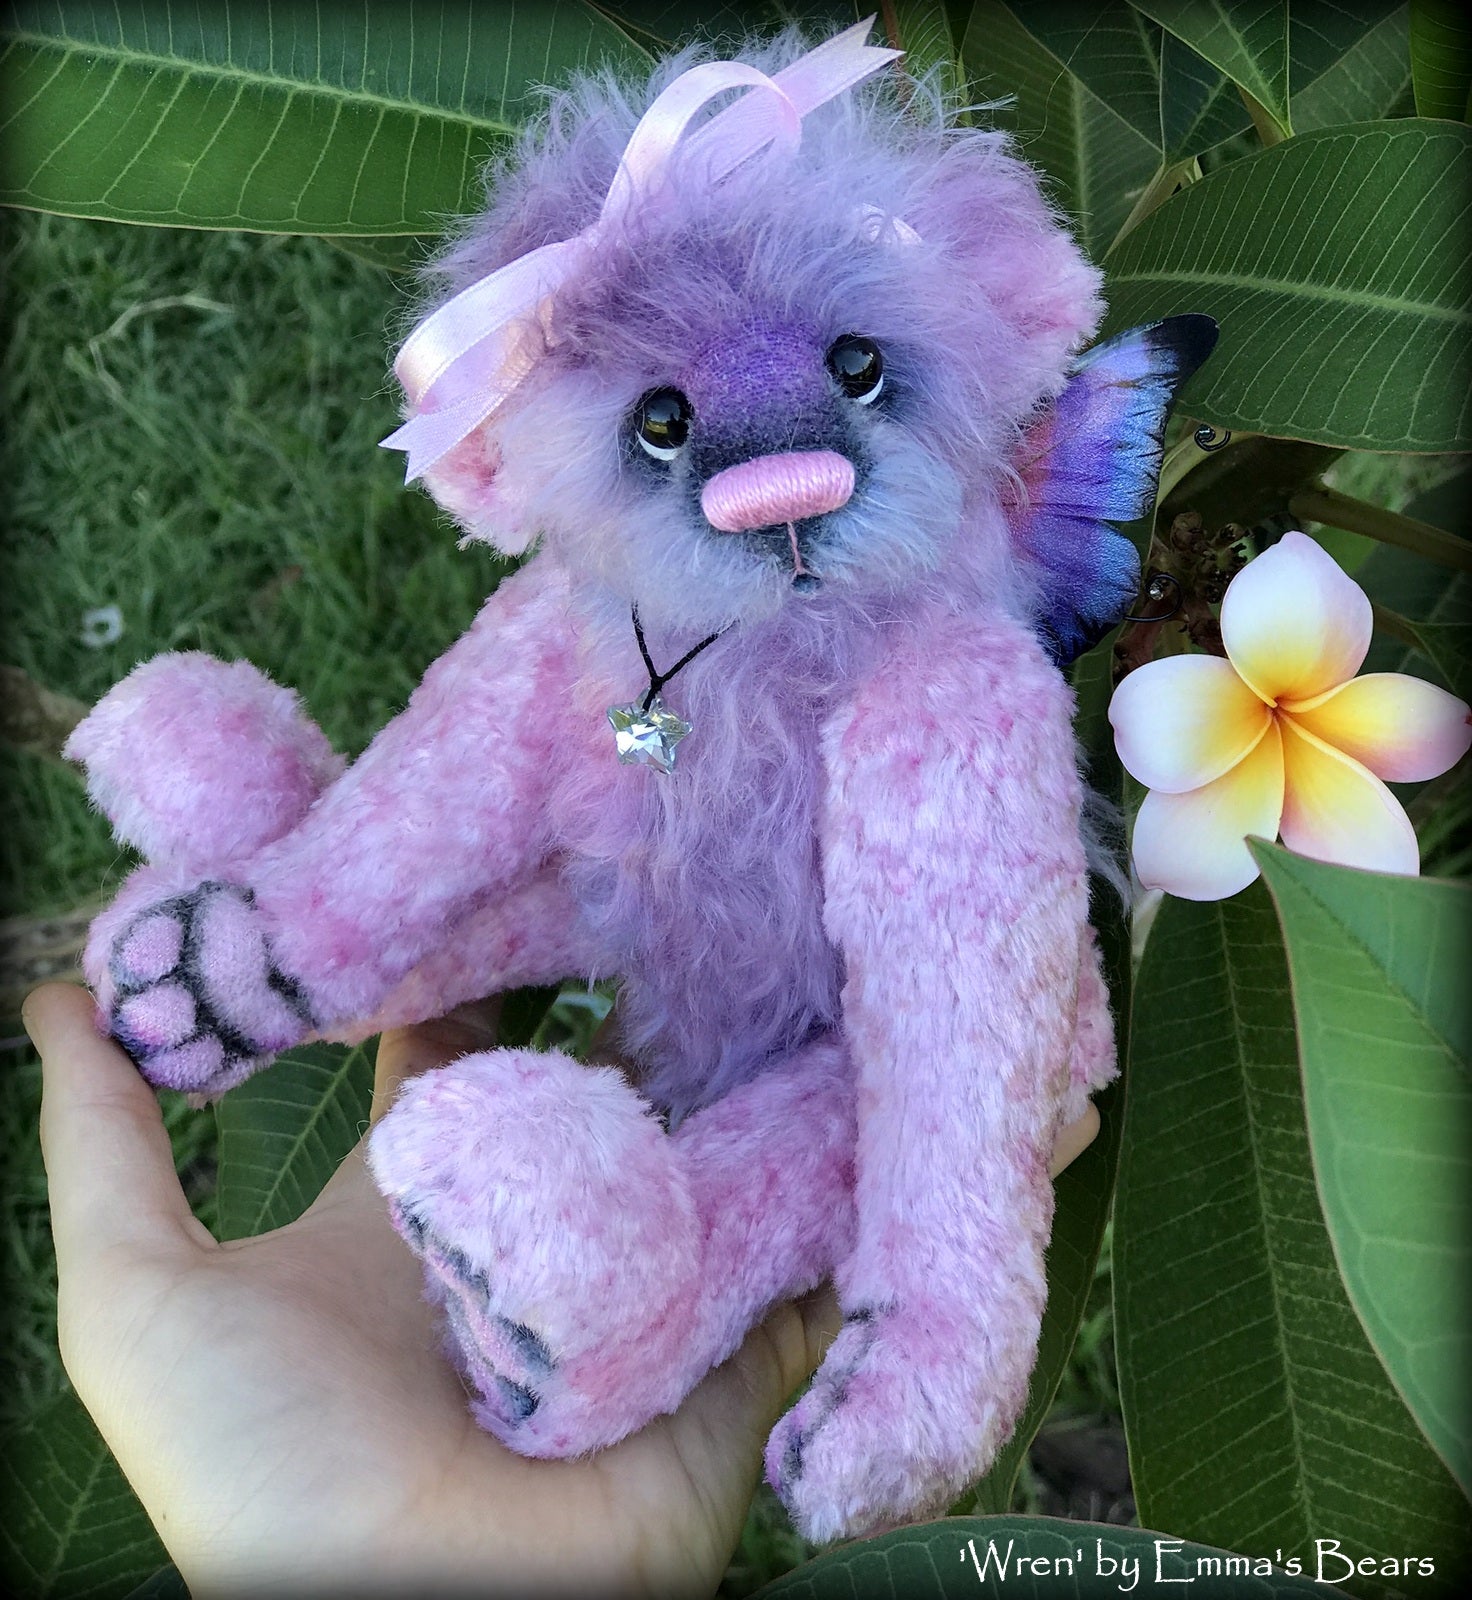 Wren -10" Hand-dyed mohair and viscose artist fairy bear by Emma's Bears - OOAK